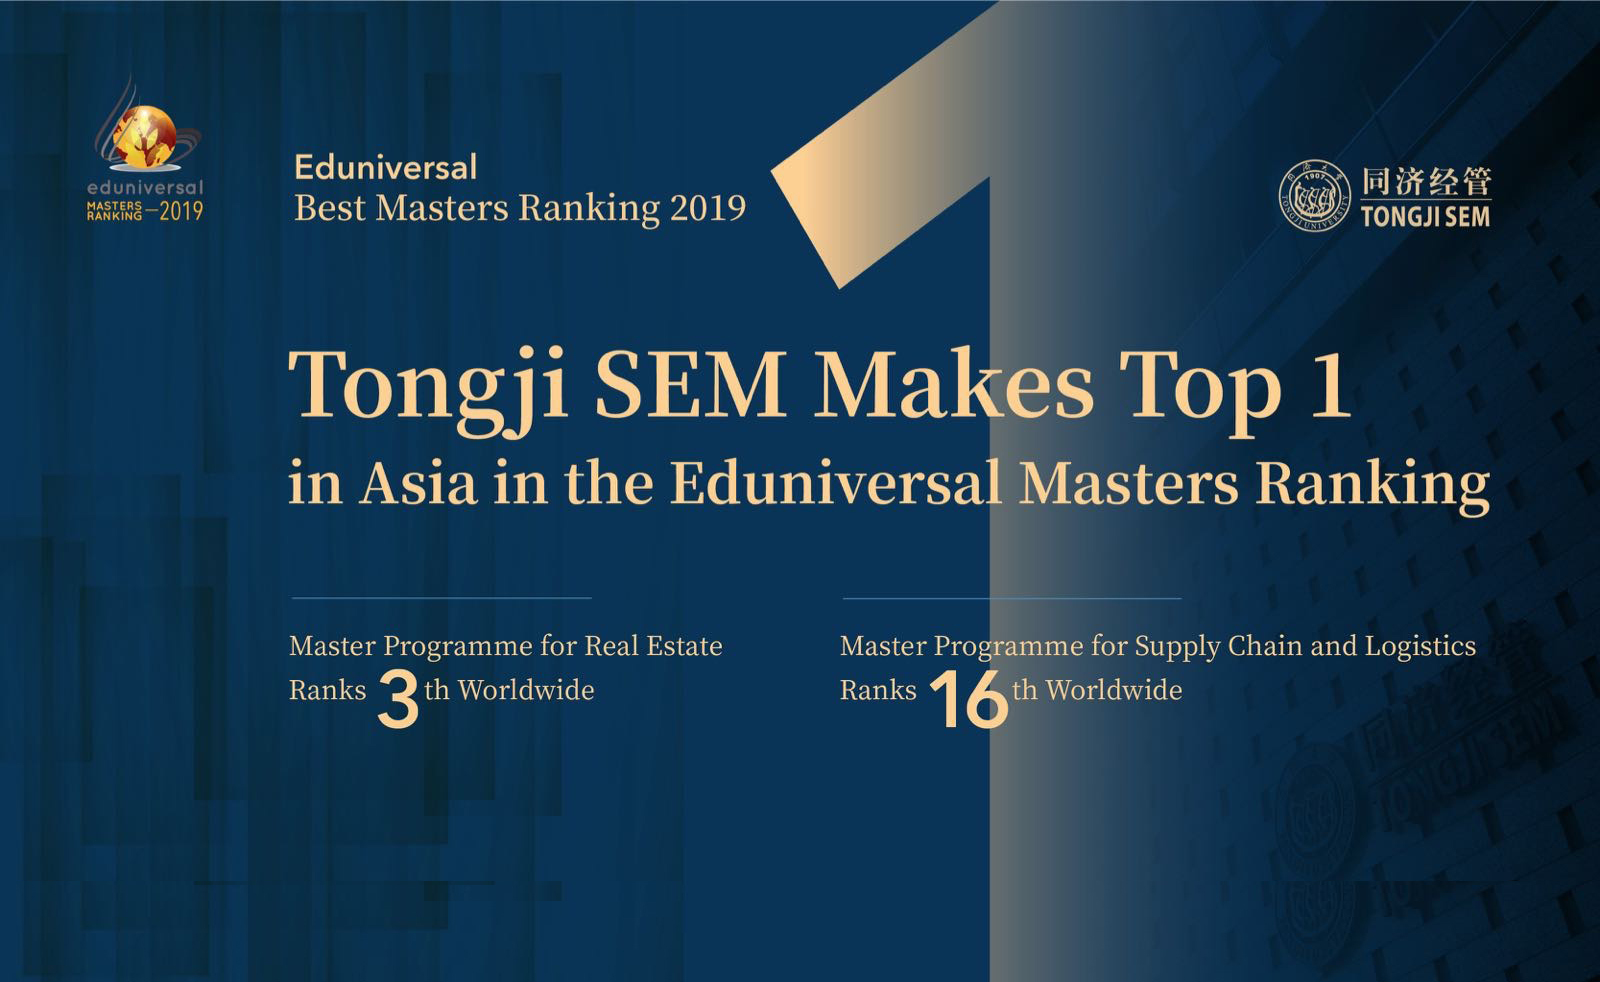 Master Programme for Real Estate of Tongji SEM Ranks Top 3rd in 2019 Eduniversal